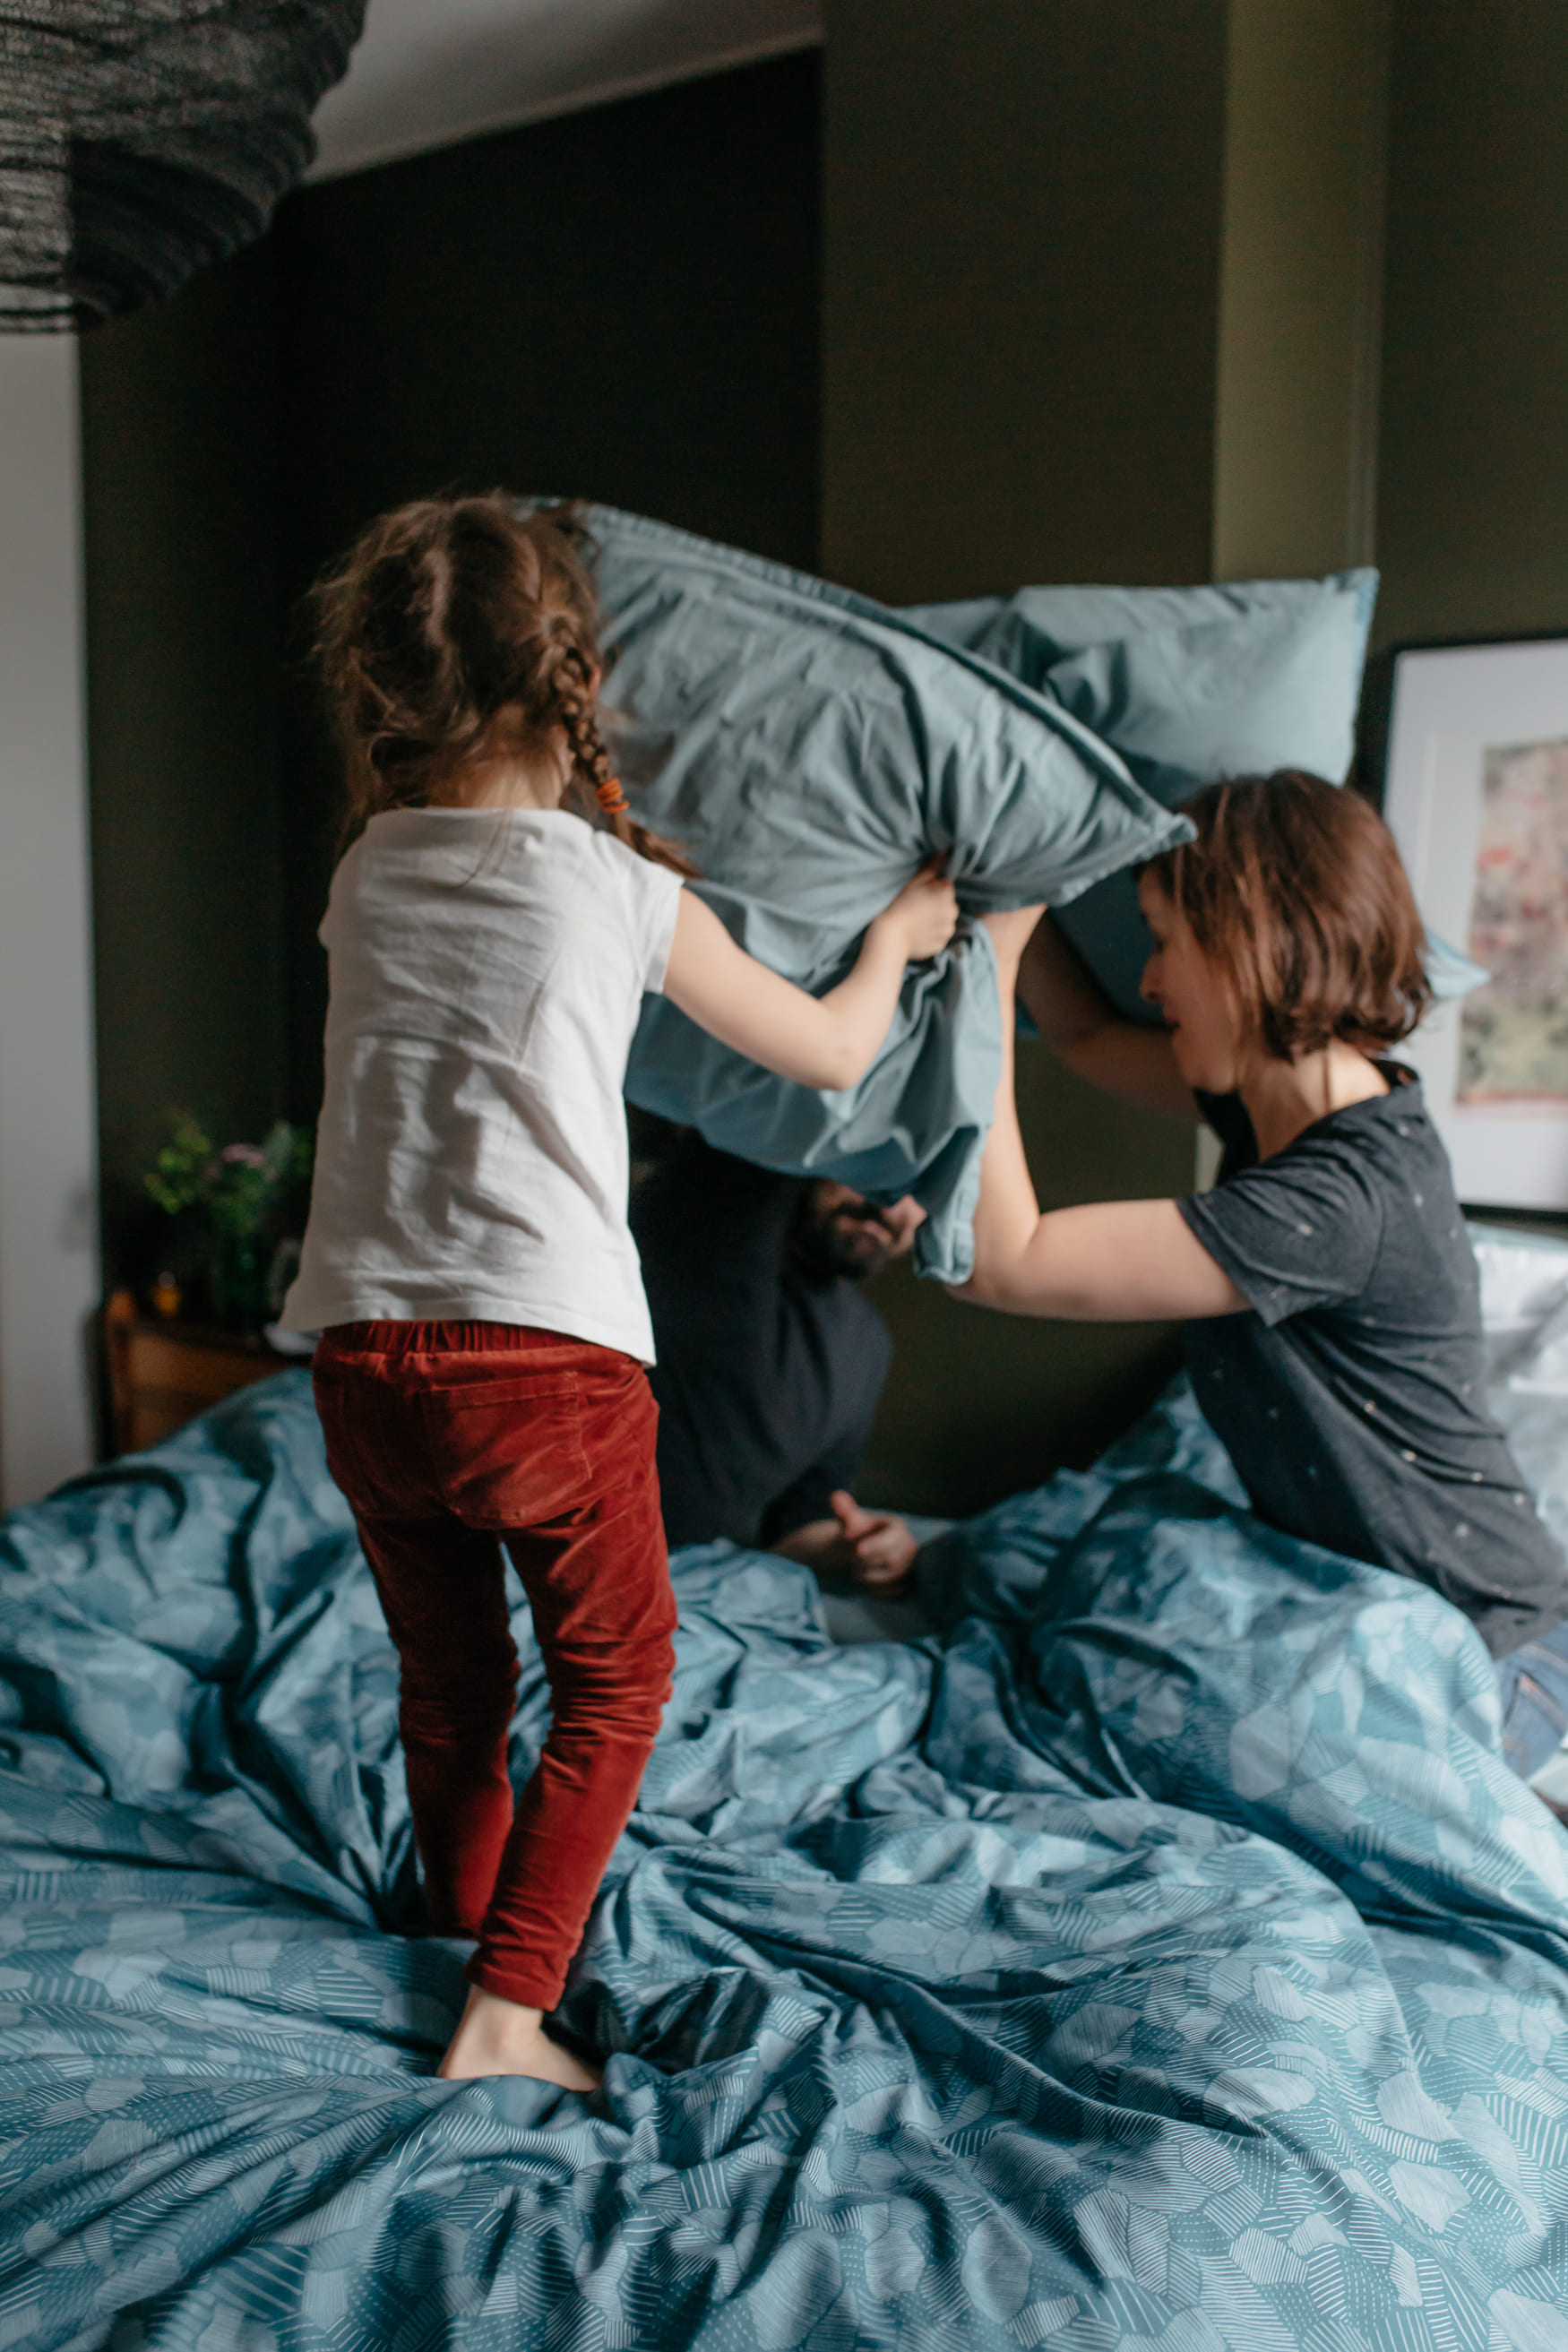 Bataille d'oreiller en famille